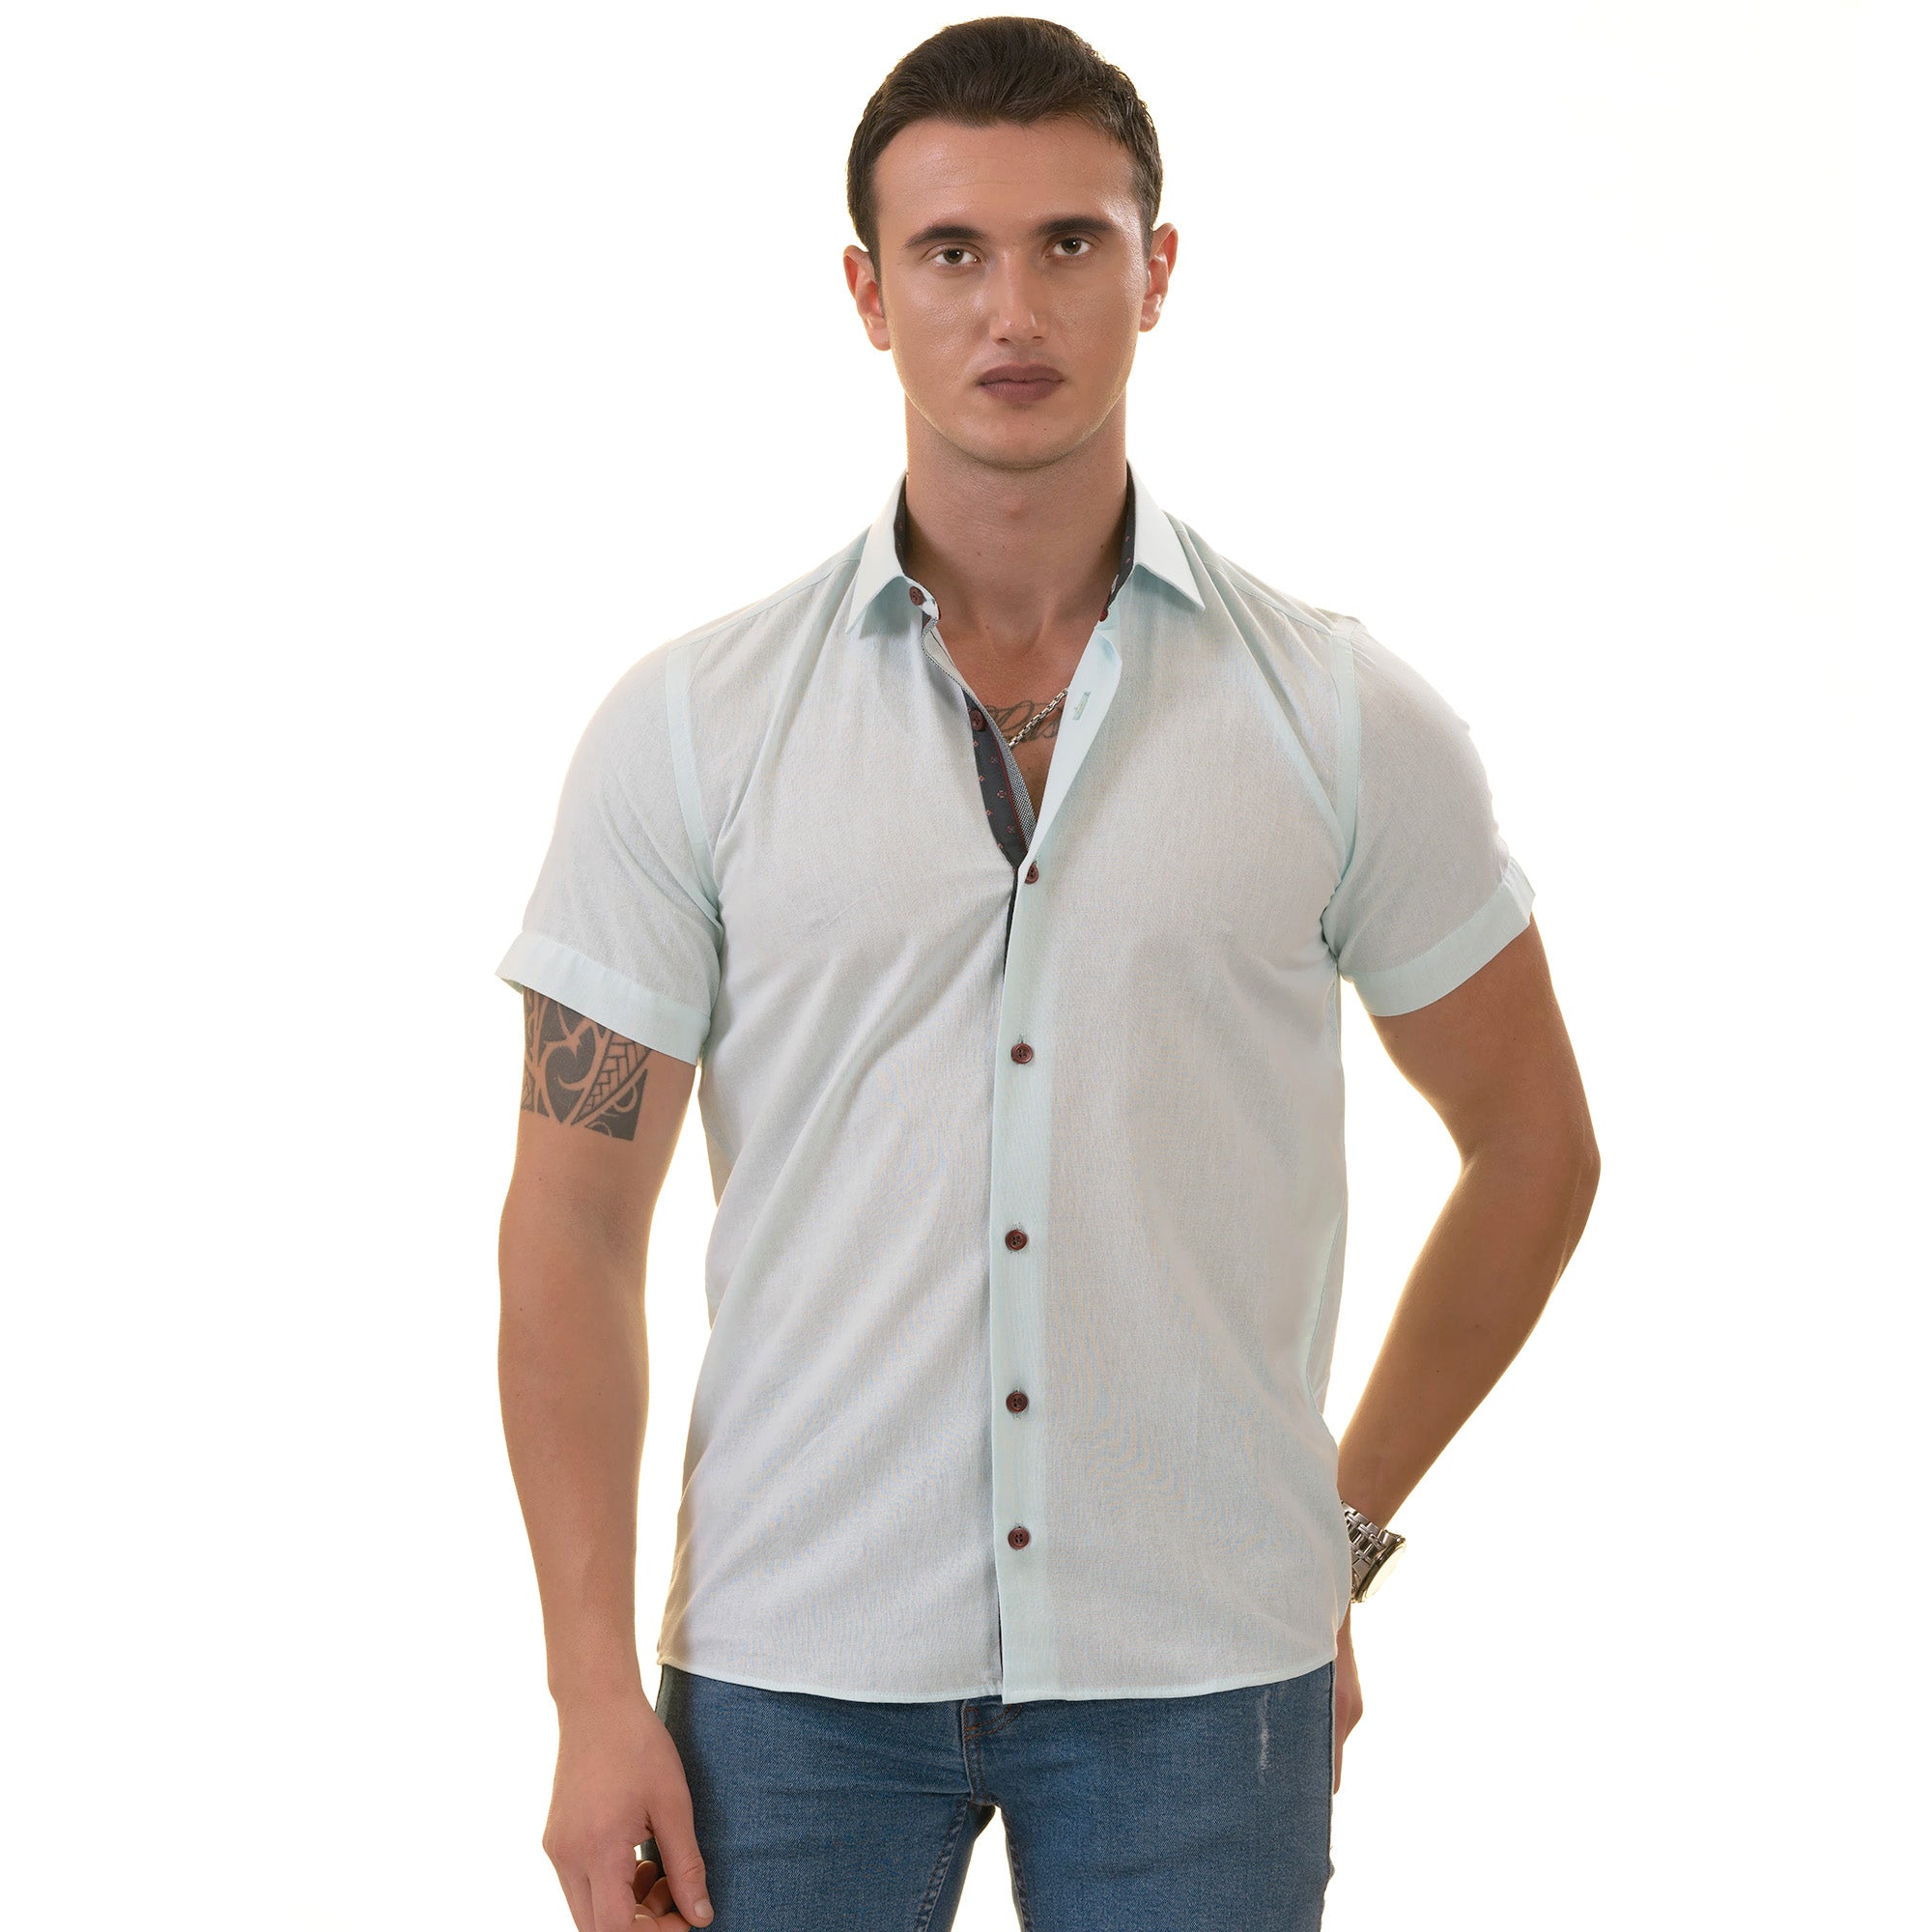 Mint Green Shirt  Paisley  Short Sleeve Button up Shirts - Tailored Slim Fit Cotton Dress Shirts